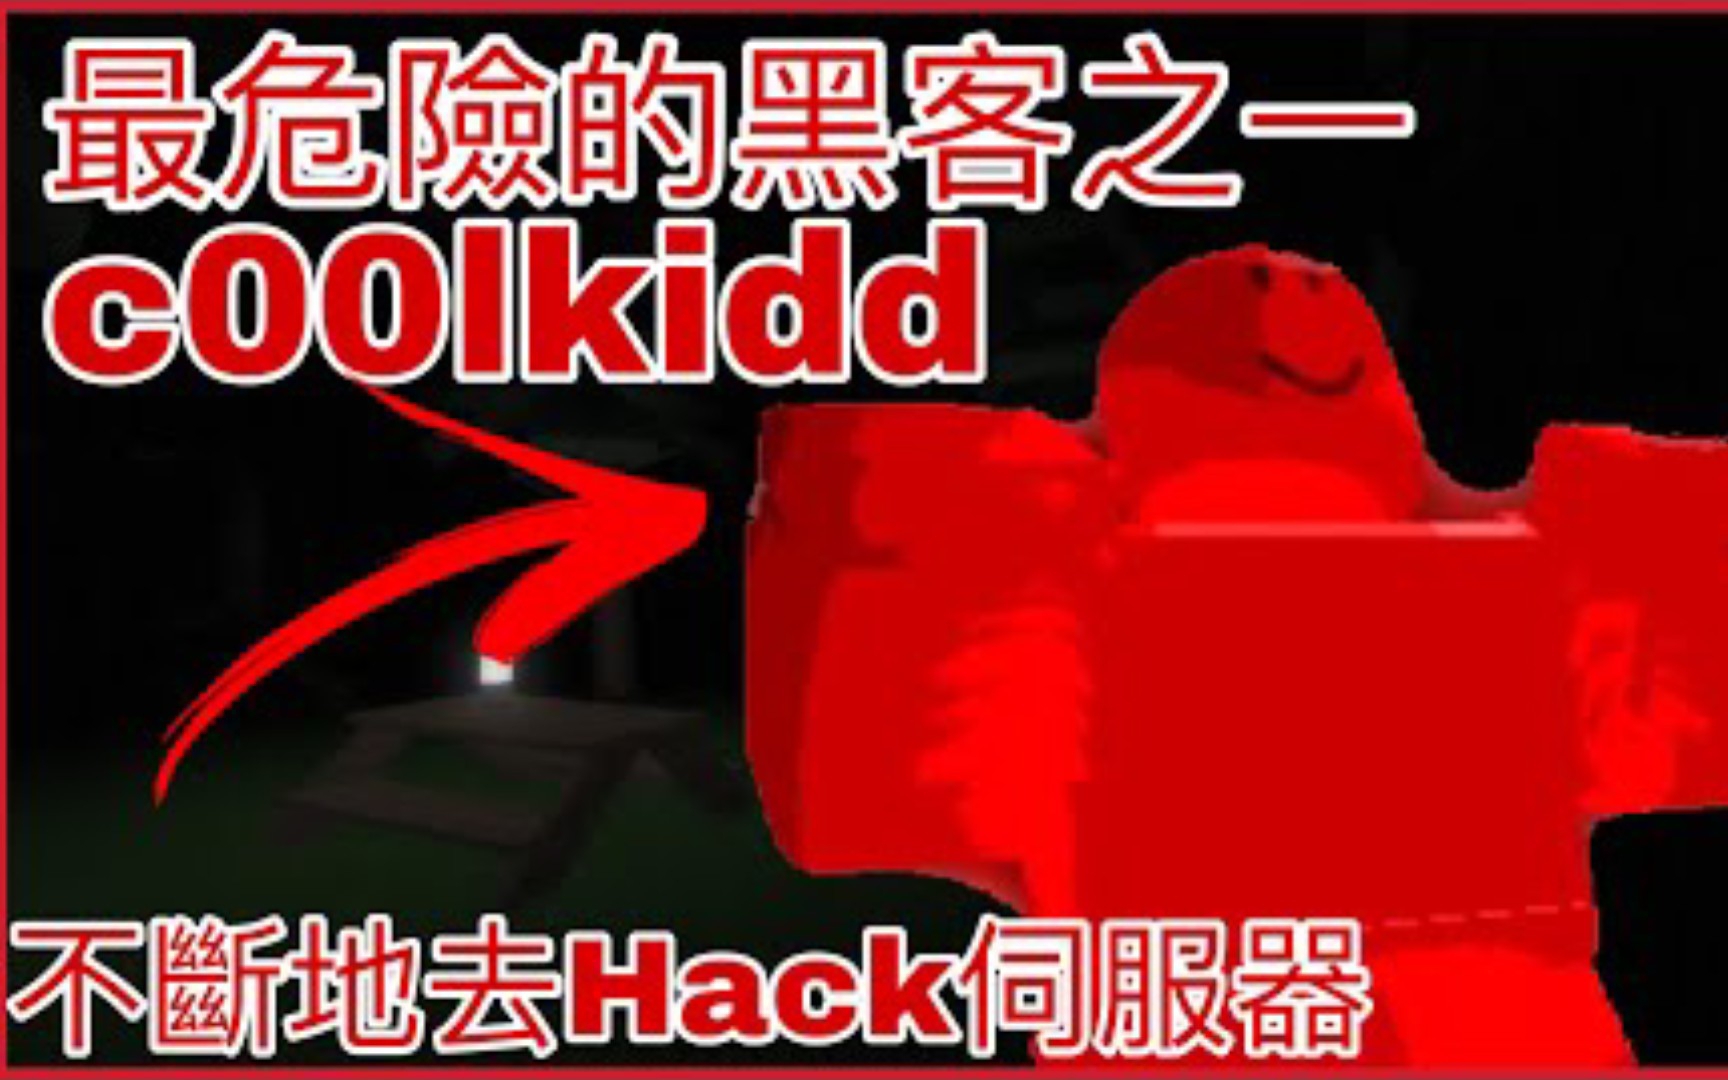 (Mr chui) ROBLOX最危险的黑客之一c00lkidd的故事|他在2014年不断地去Hack服务器?|为何最近会看到他的身影?